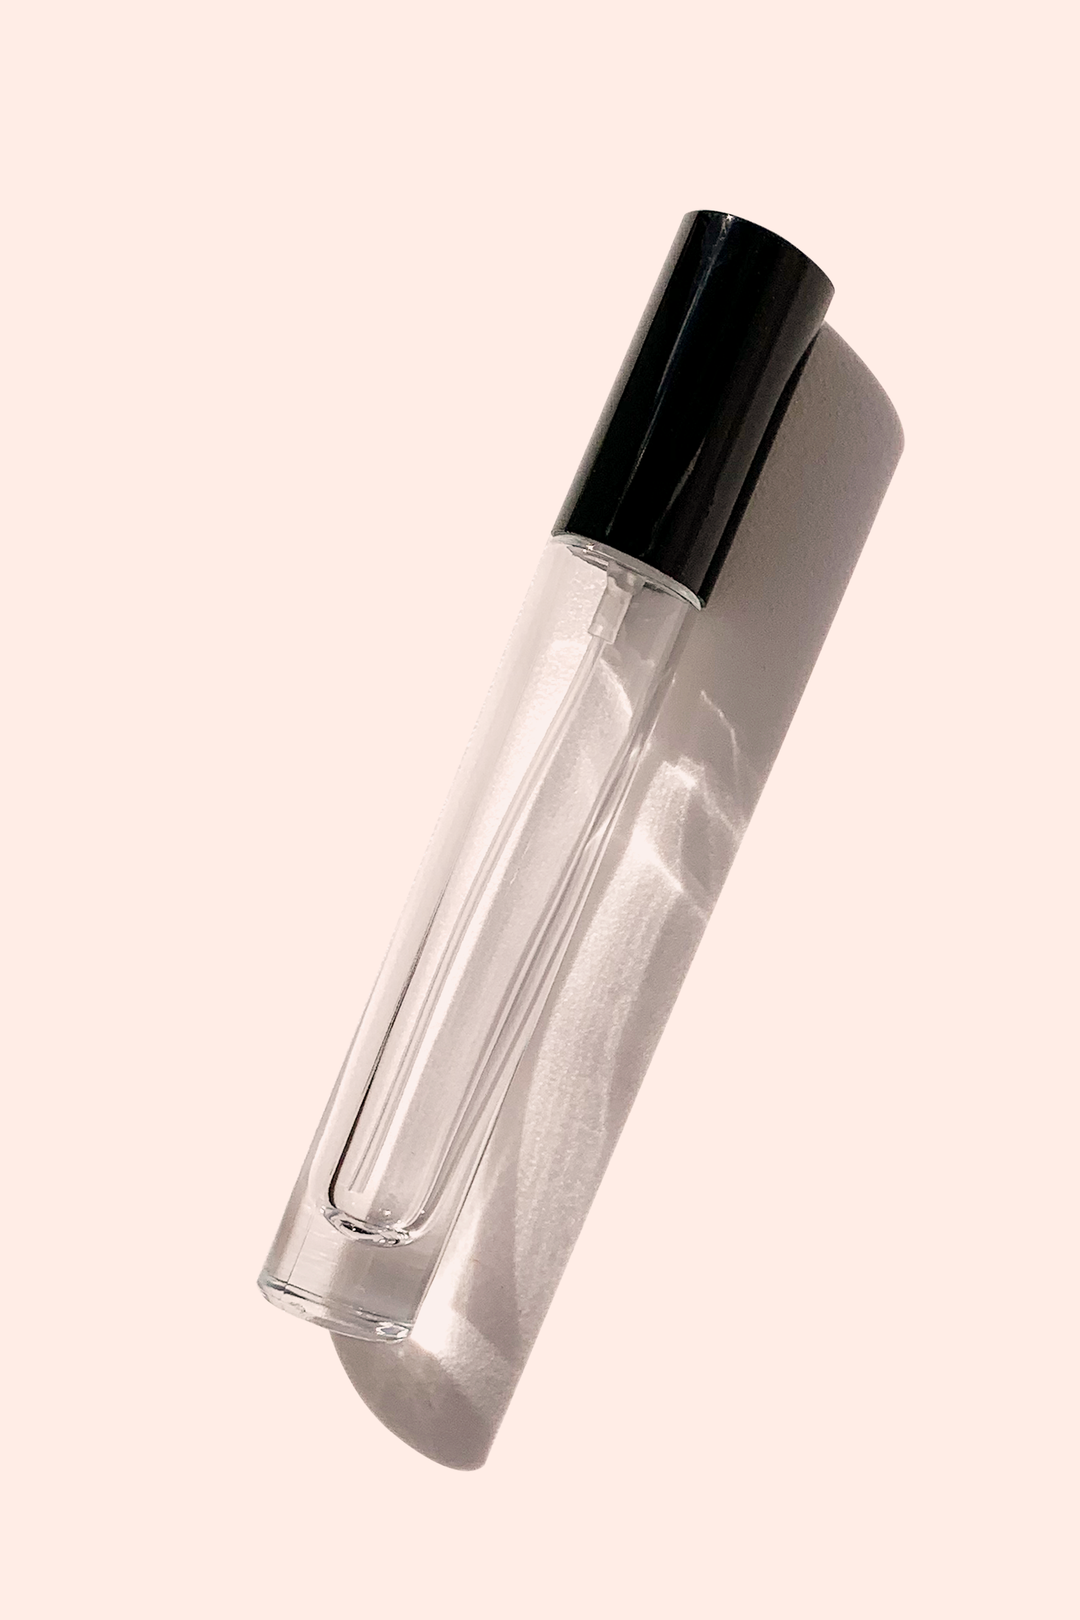 10ml Empty Glass Perfume Spray Bottle